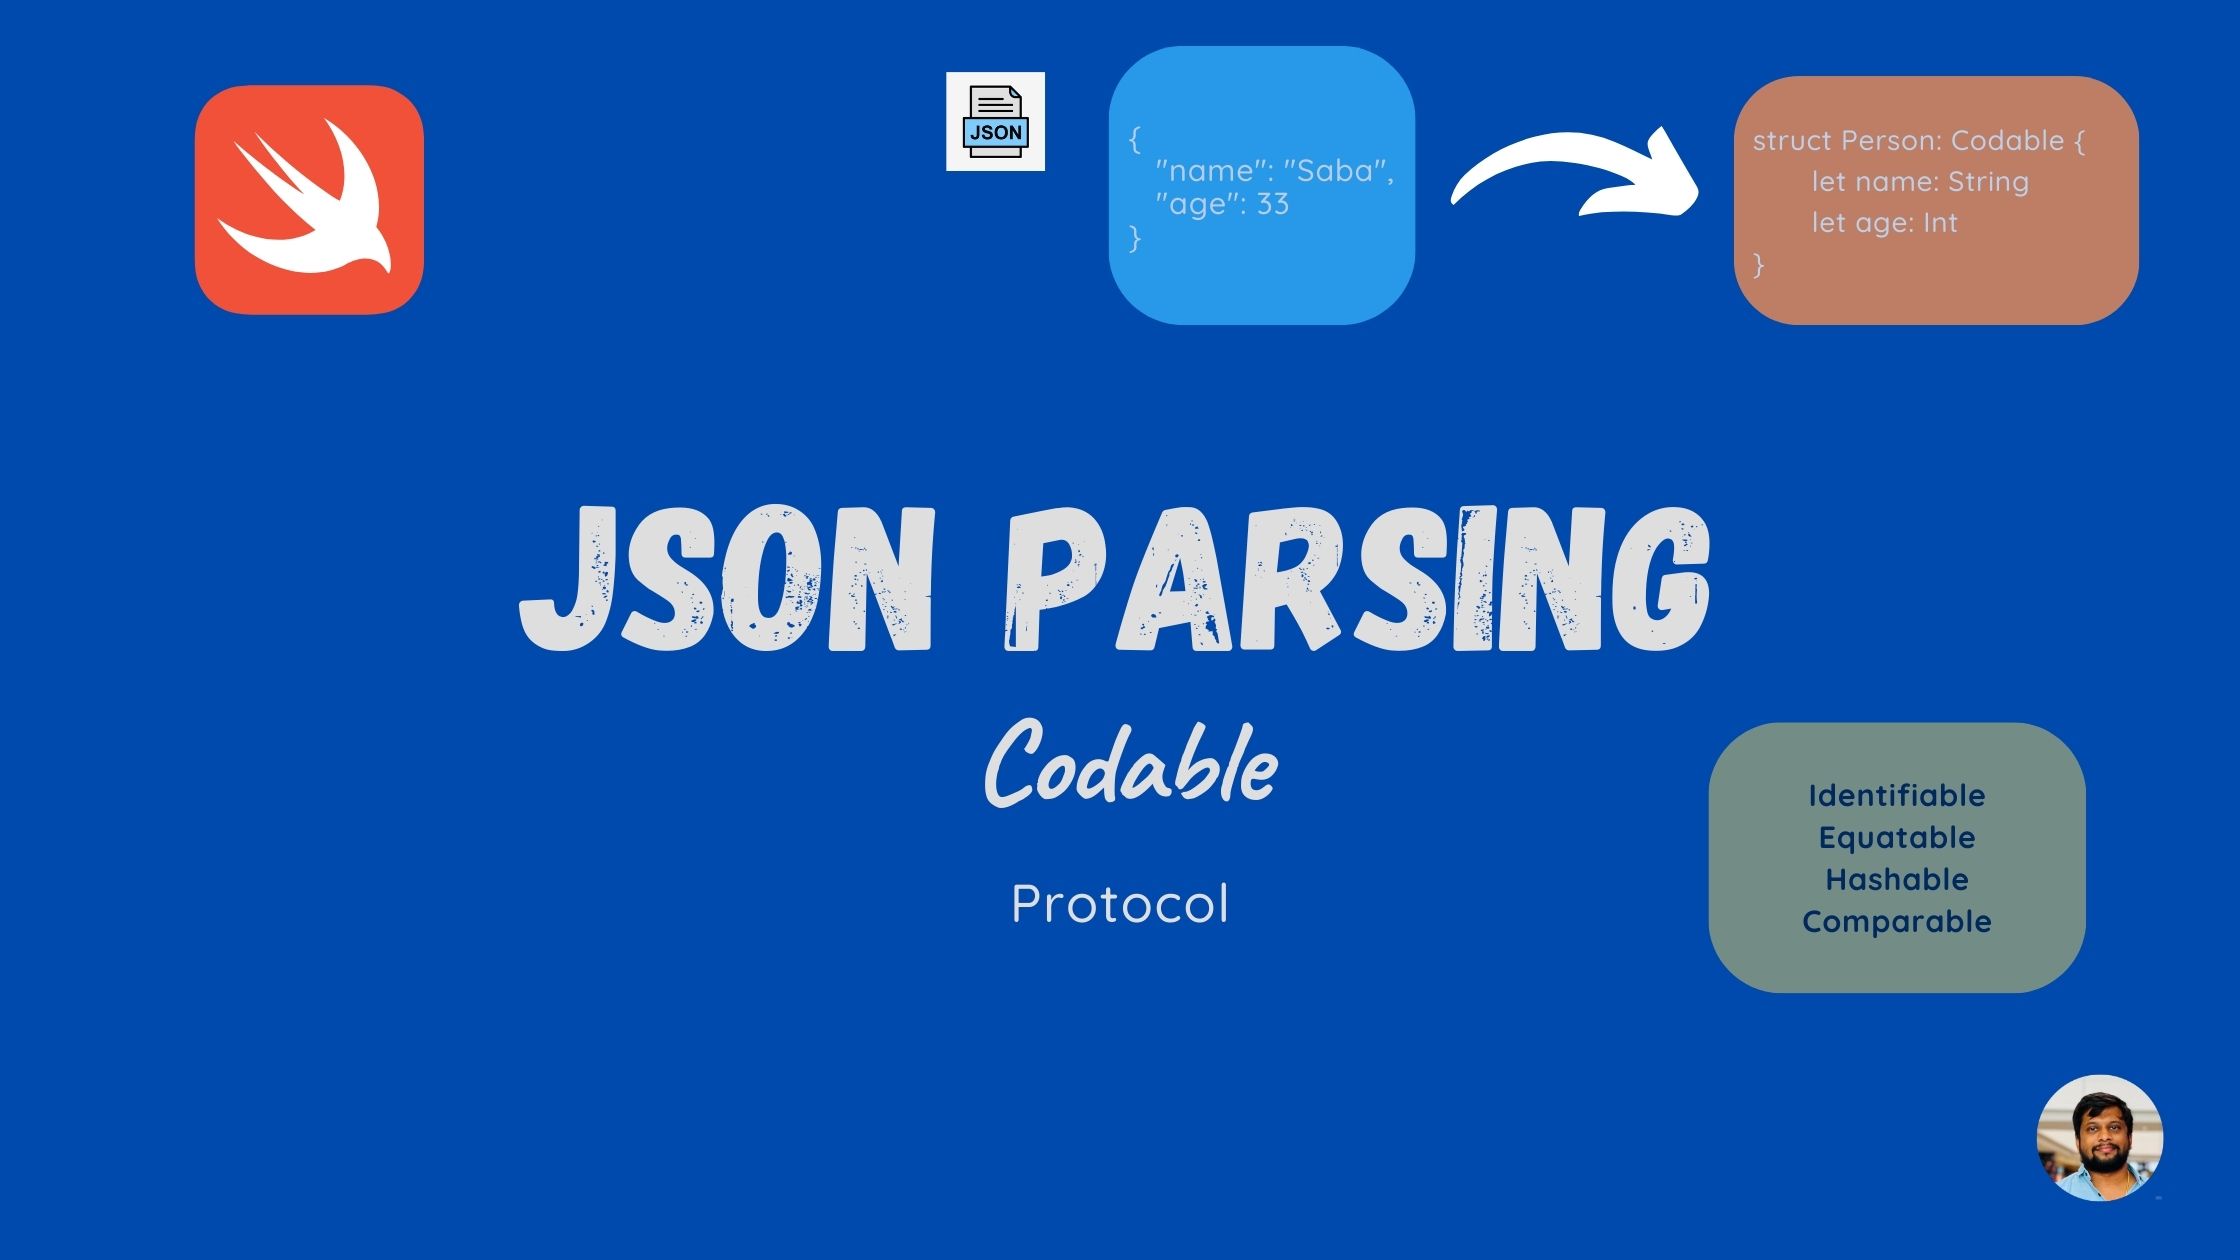 Demo of JSON Parsing